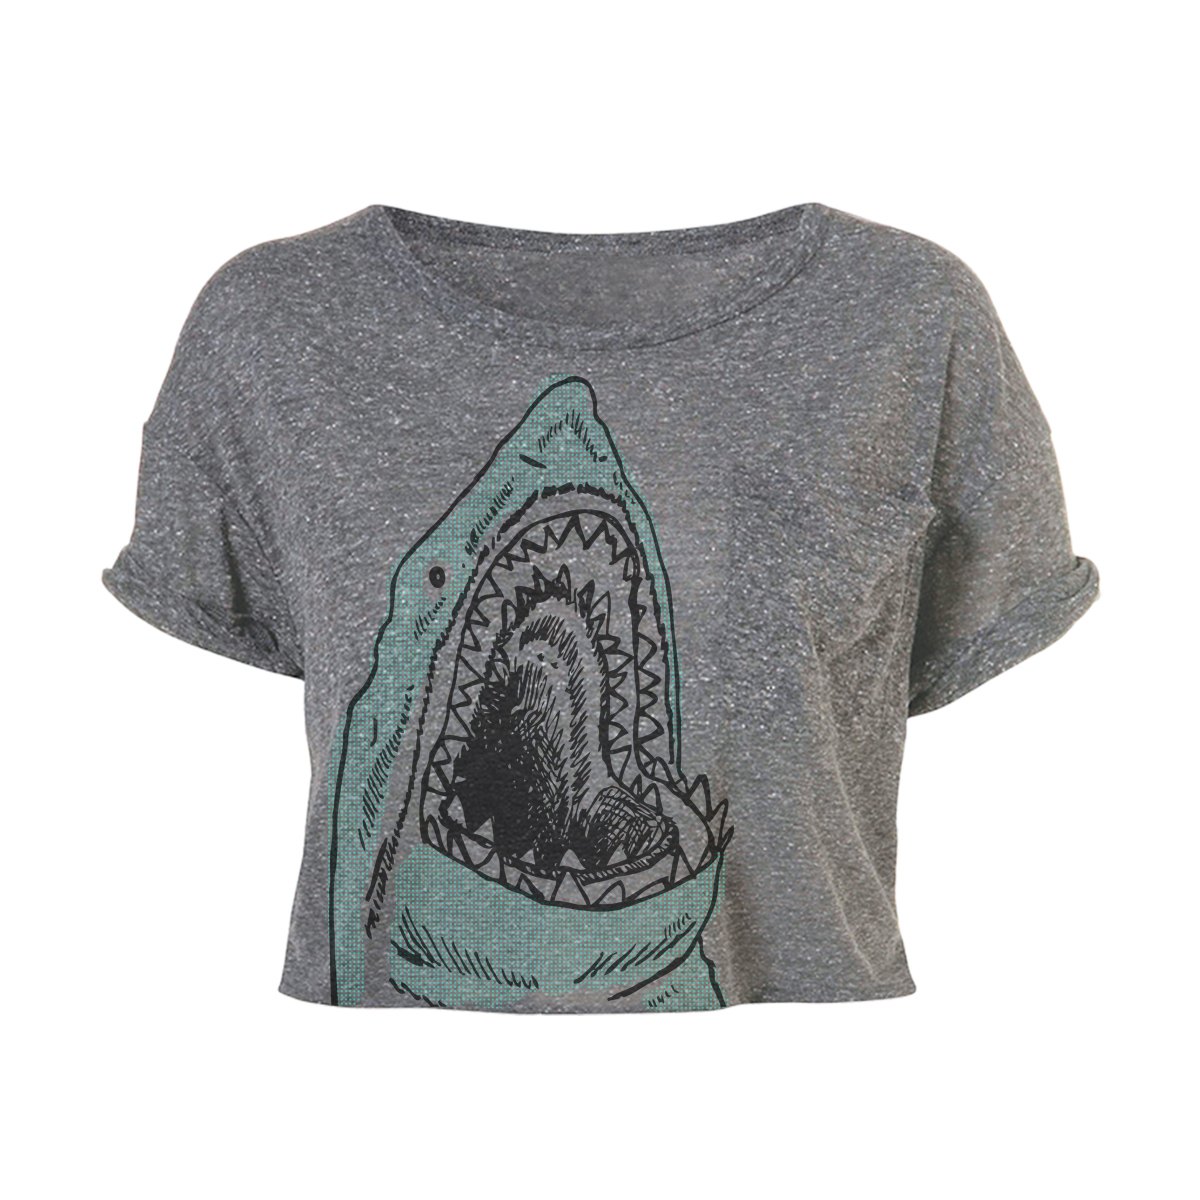 shark-tshirt-design.jpg